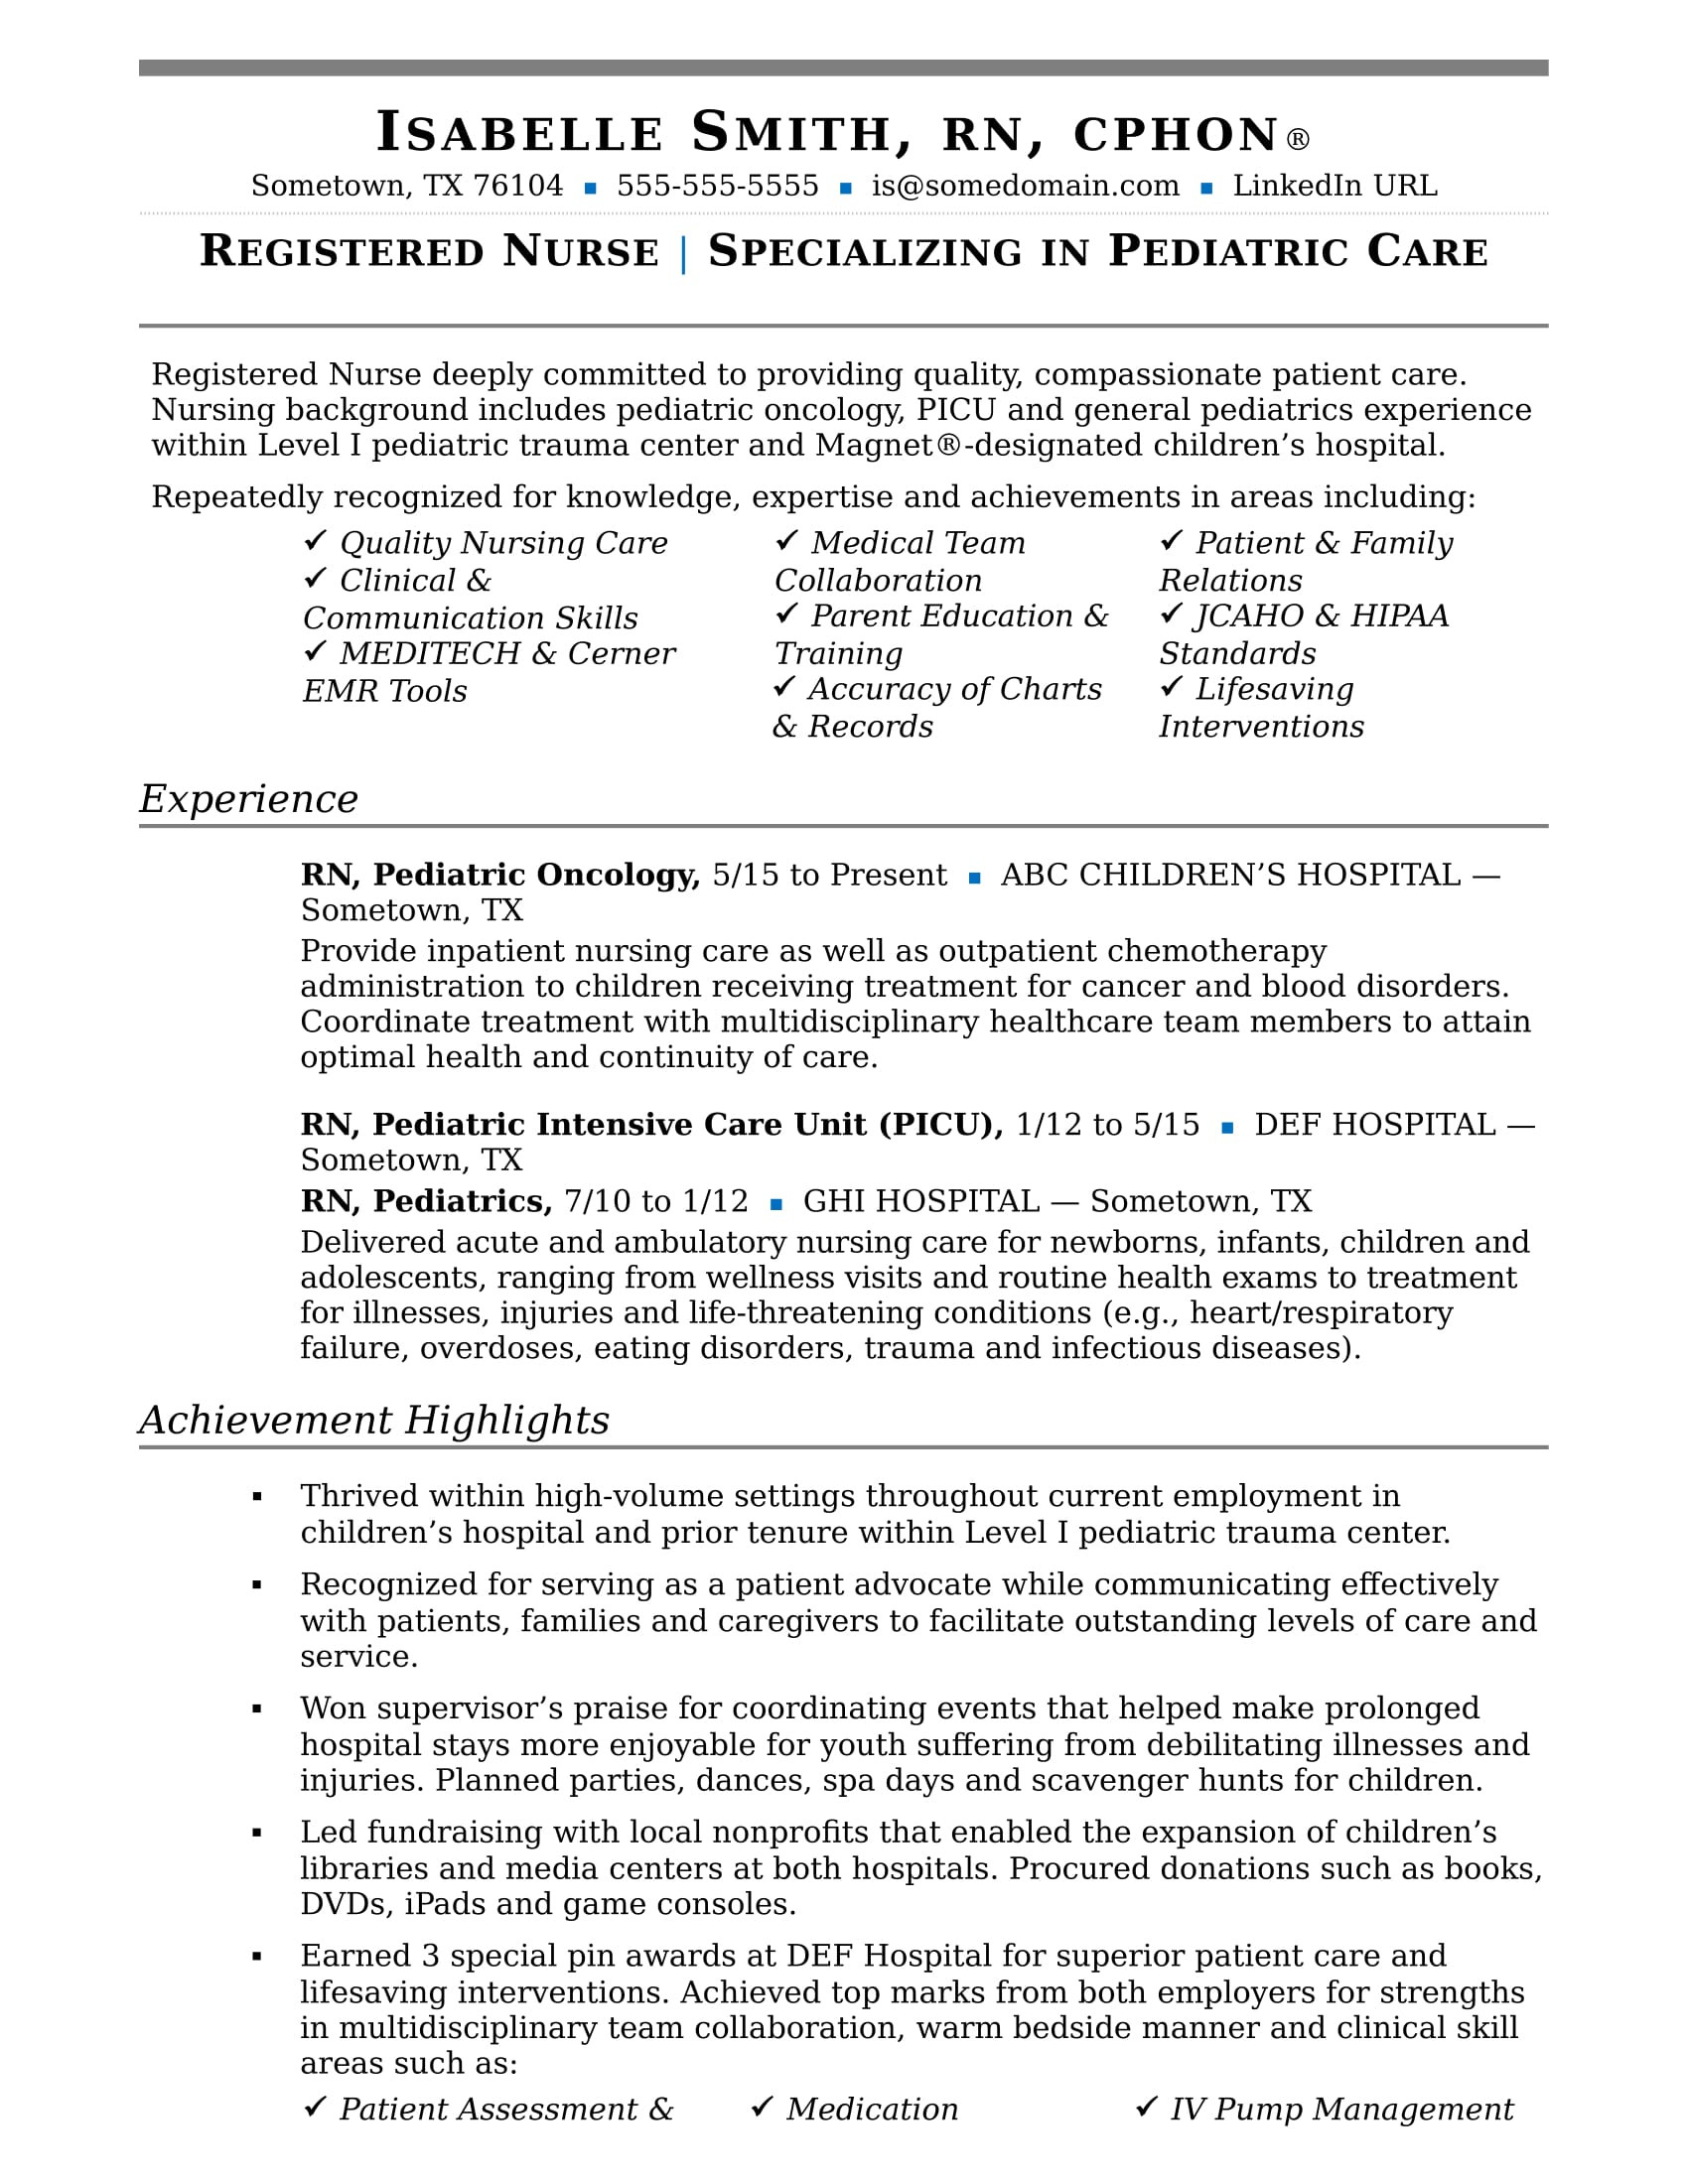 Sample Resume for Registered Nurse with Experience Nurse Resume Sample Monster.com